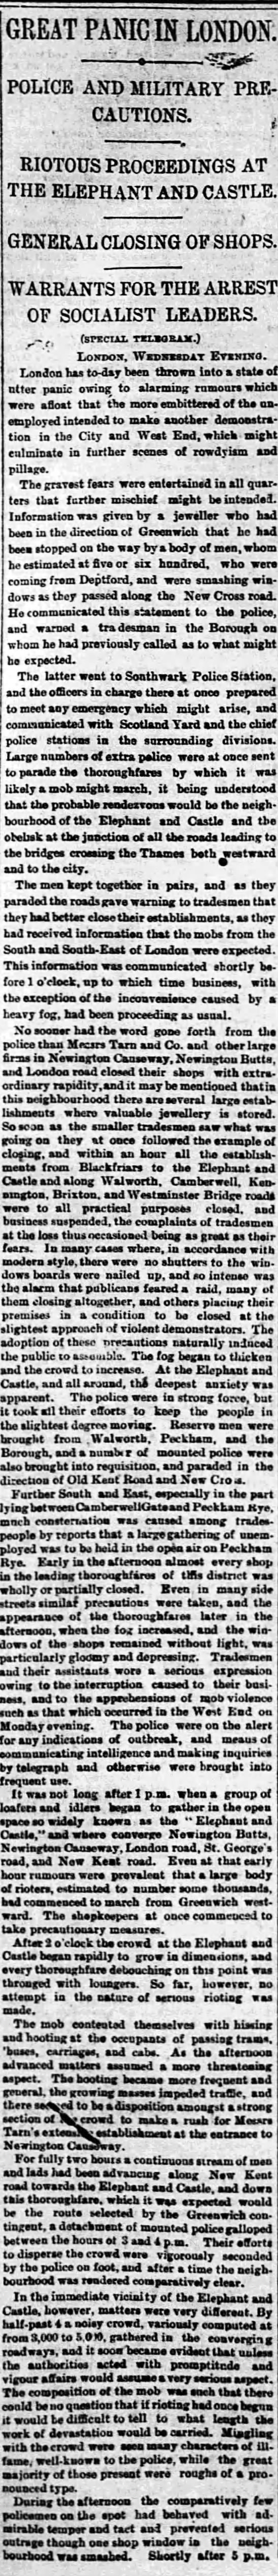 London riots 1886